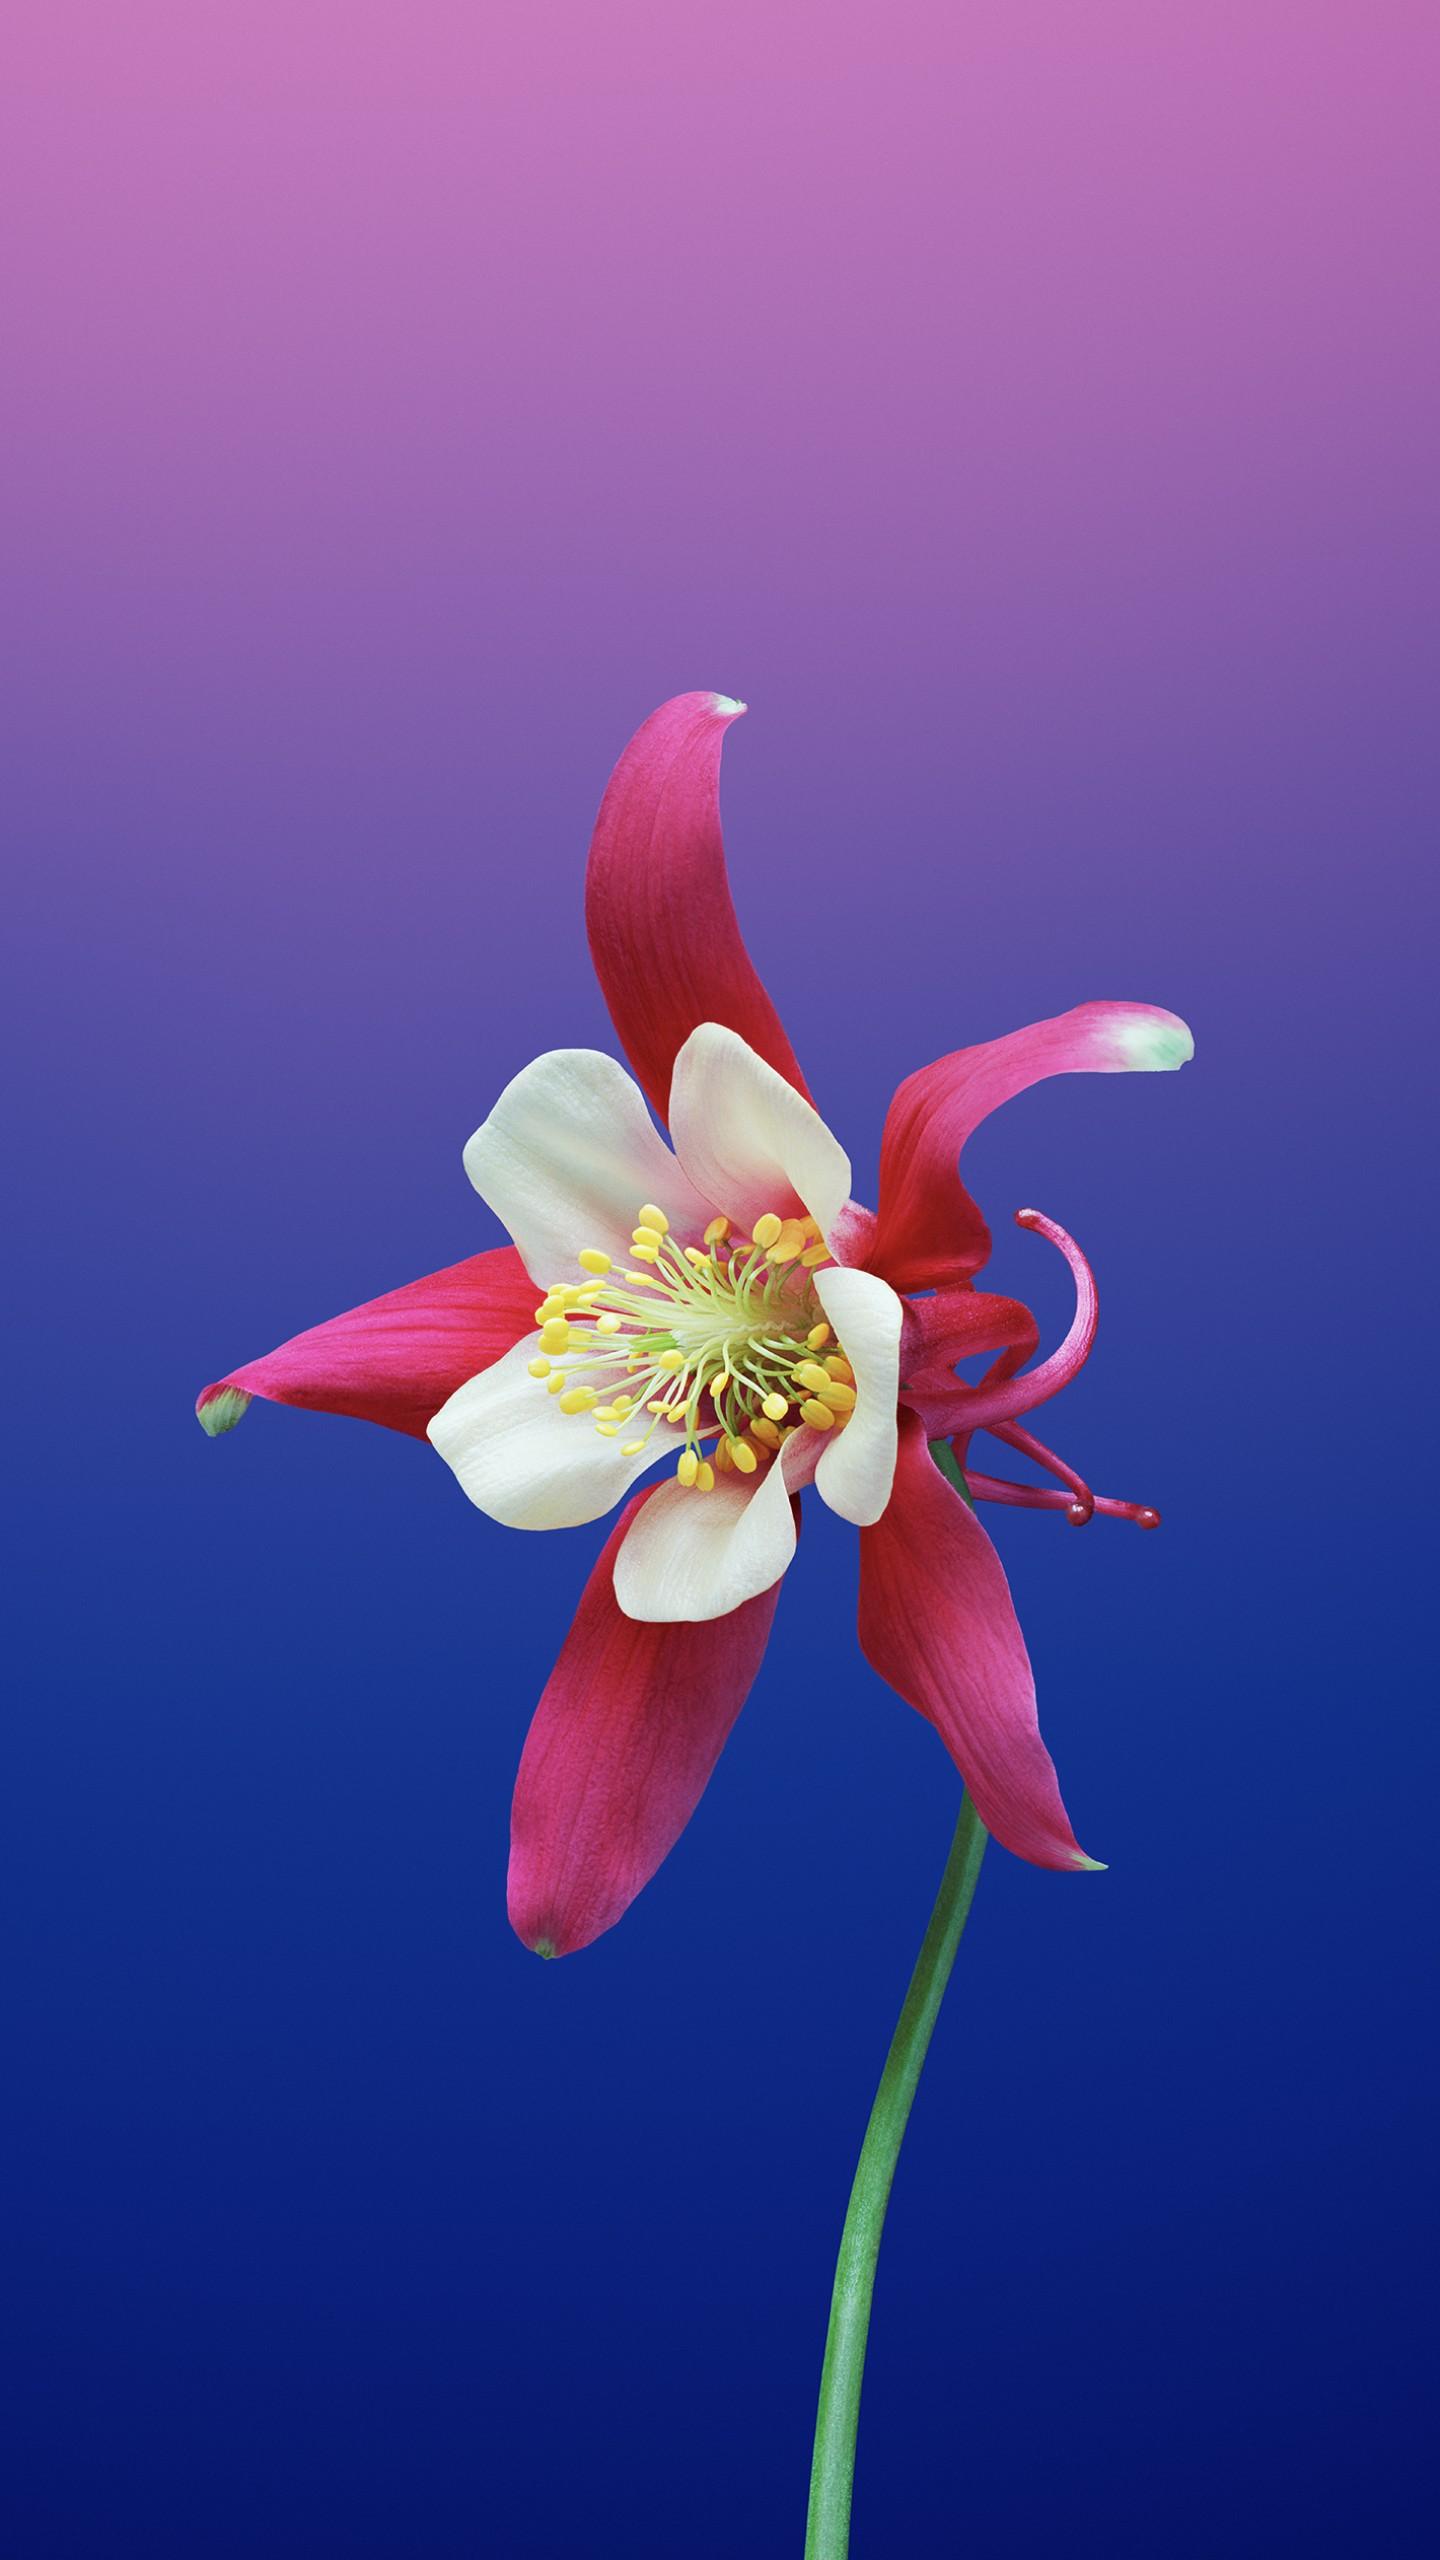 Wallpaper iPhone X wallpaper, iPhone flower, iOS retina, 4k